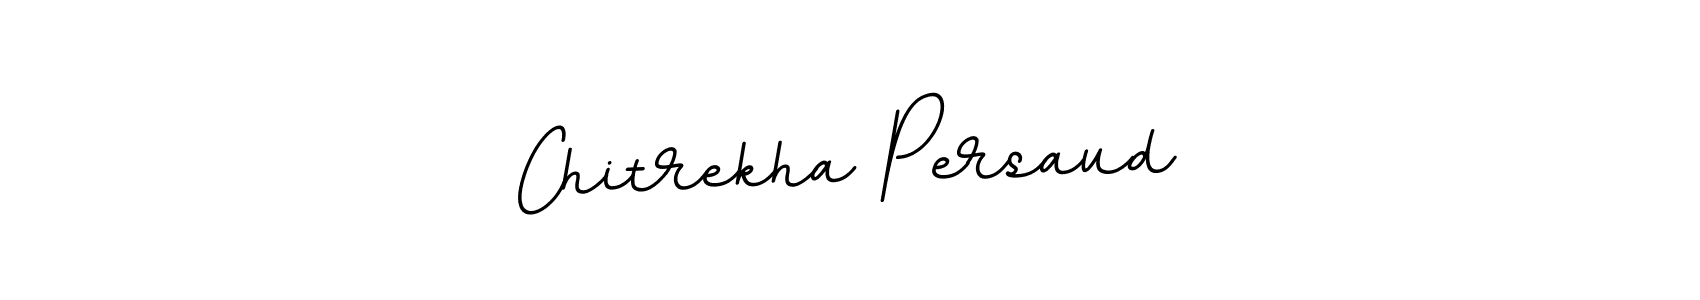 How to Draw Chitrekha Persaud signature style? BallpointsItalic-DORy9 is a latest design signature styles for name Chitrekha Persaud. Chitrekha Persaud signature style 11 images and pictures png